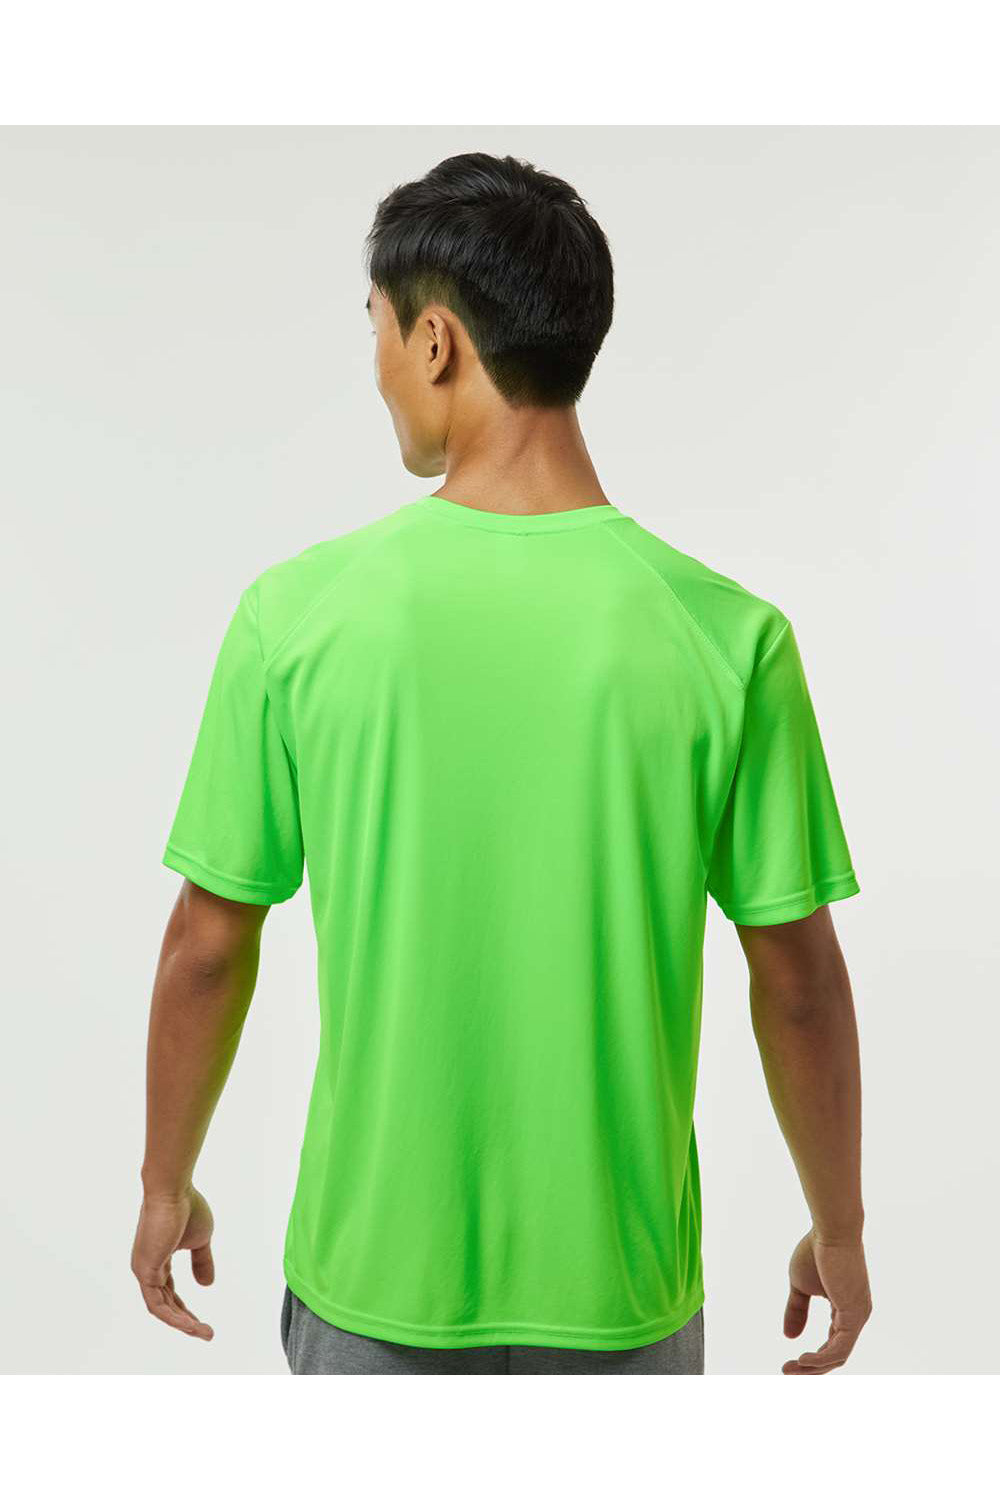 Paragon 200 Mens Islander Performance Short Sleeve Crewneck T-Shirt Neon Lime Green Model Back